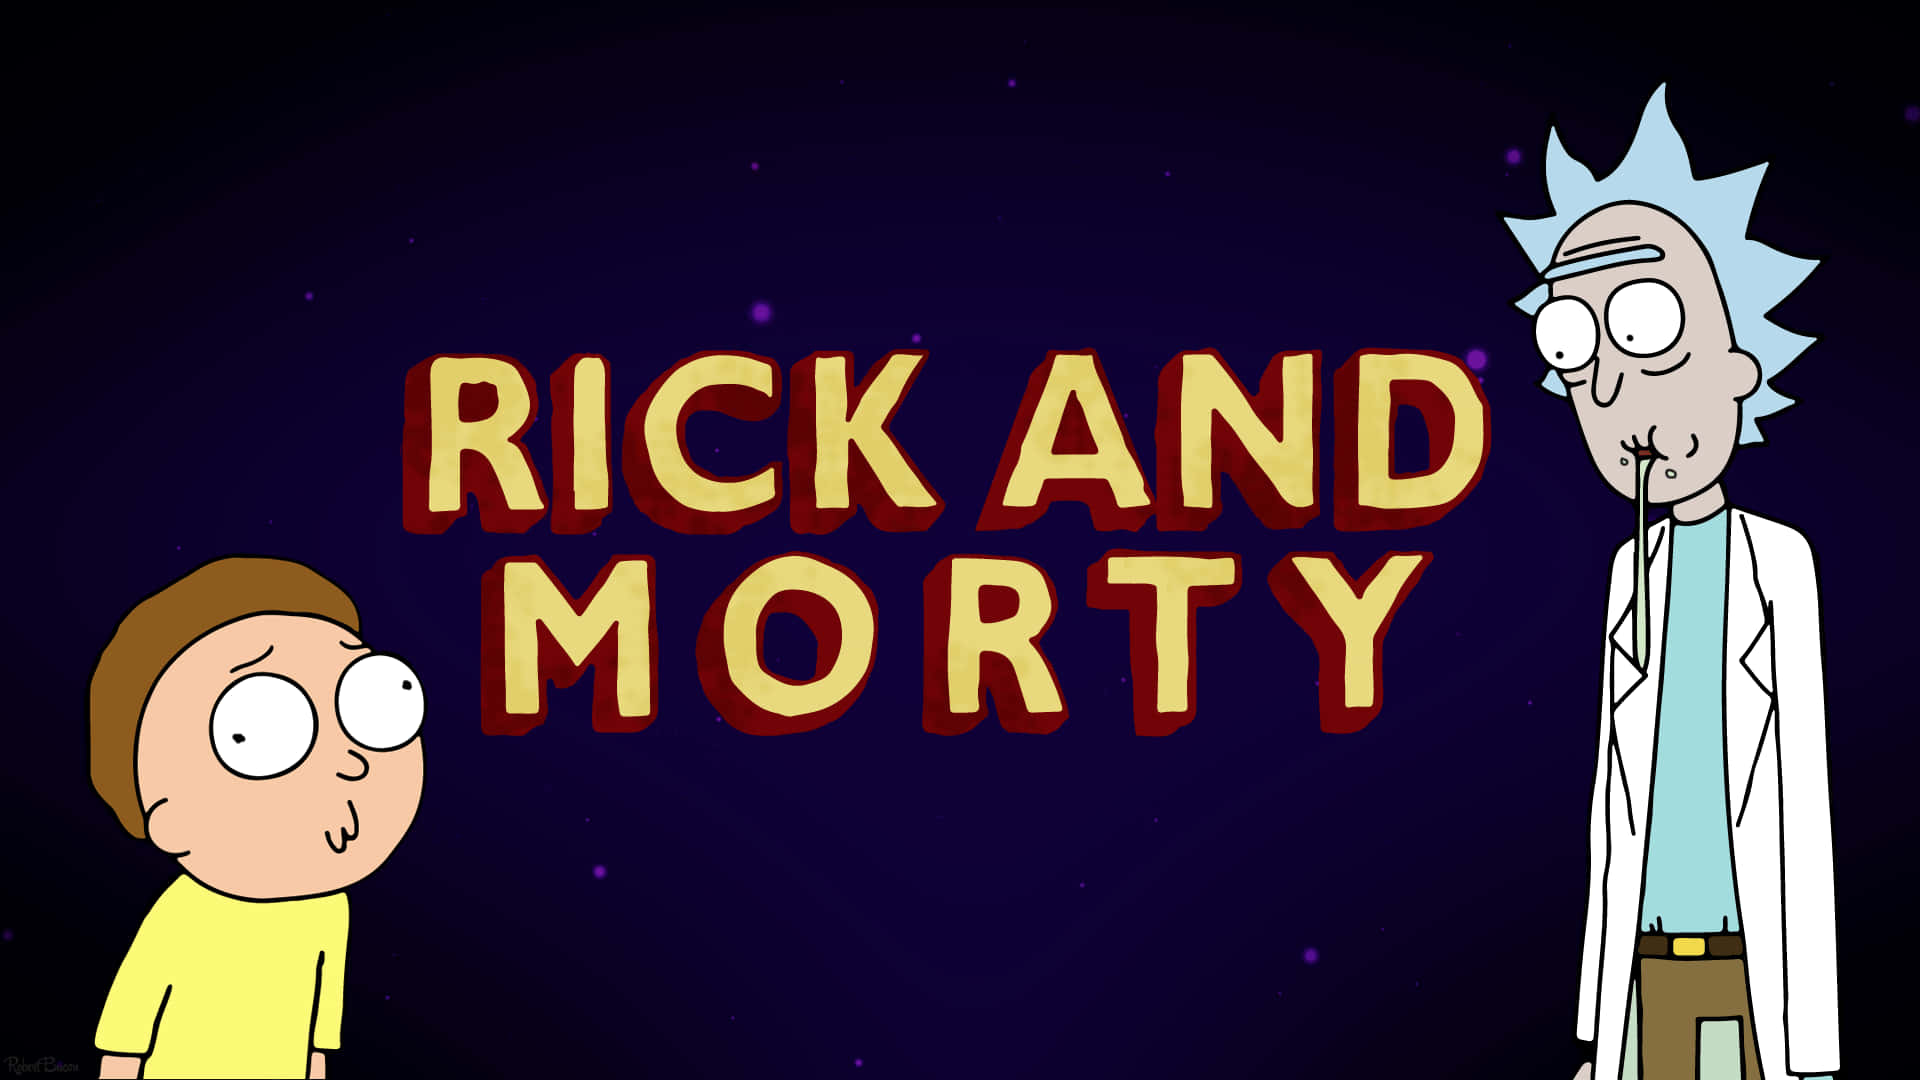 Rickund Morty - Fernsehserie. Wallpaper